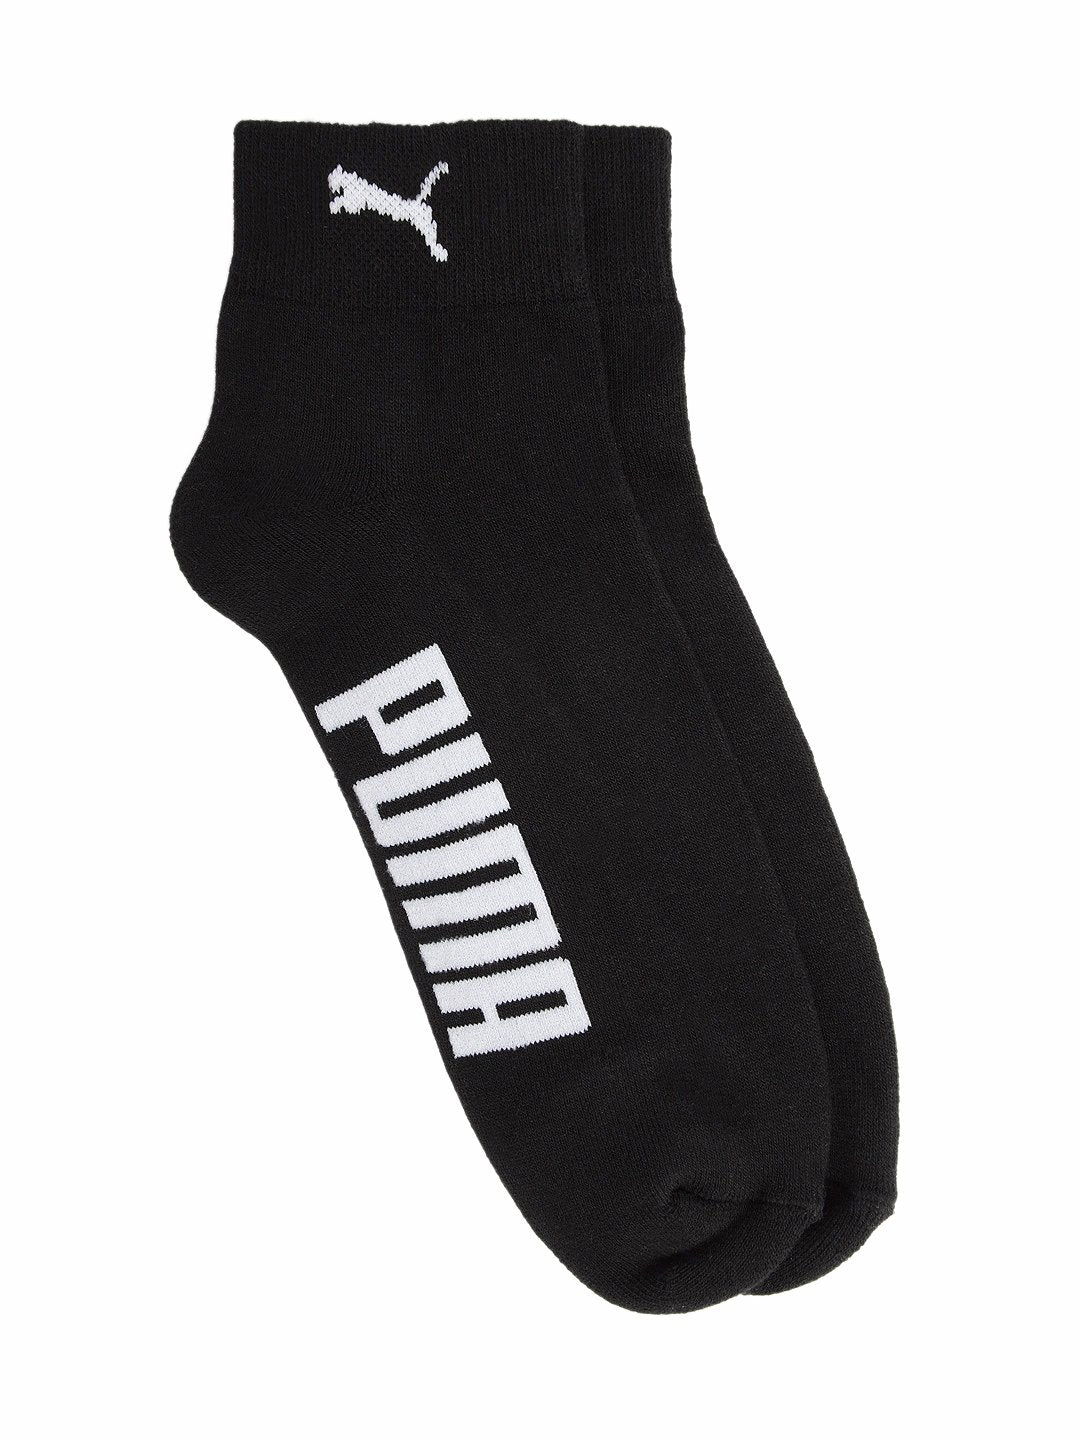 Puma Men Foundation Quarters Black Socks